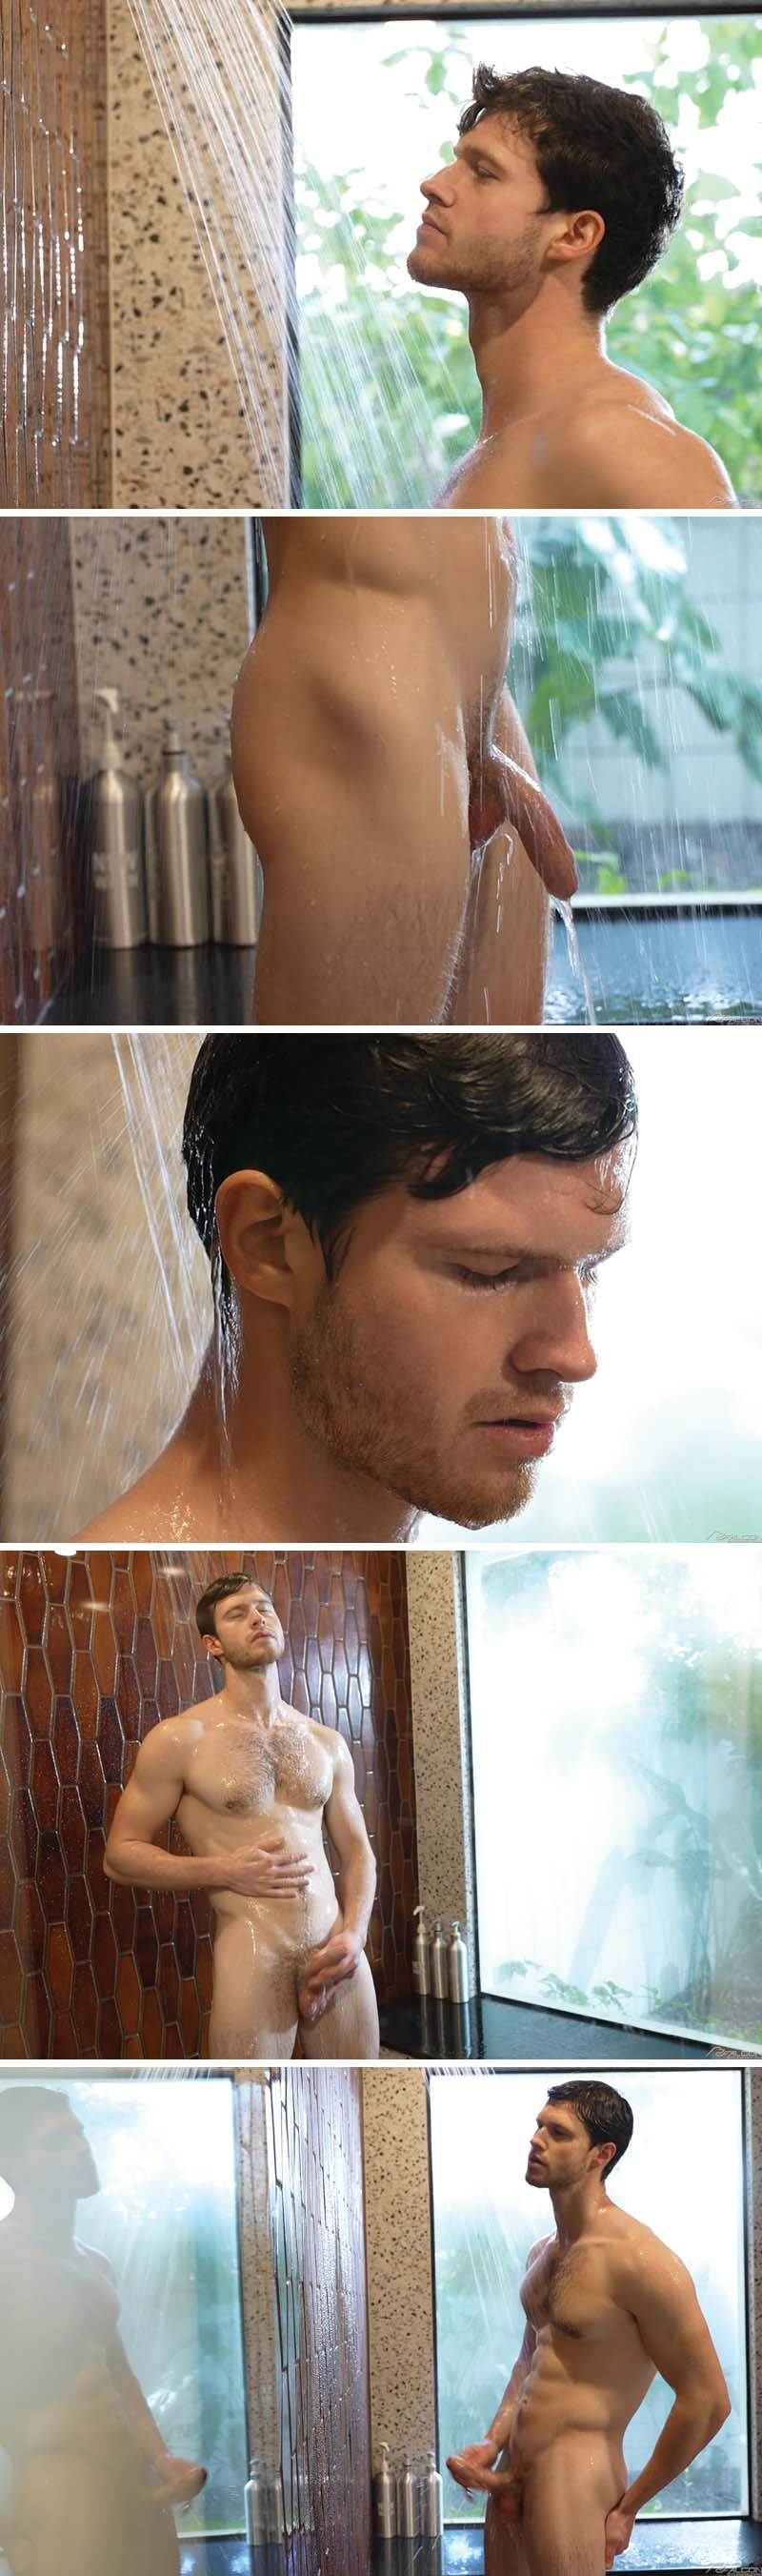 Count Me In, Scene 4 (Finn Harding's Shower Solo) at FalconStudios